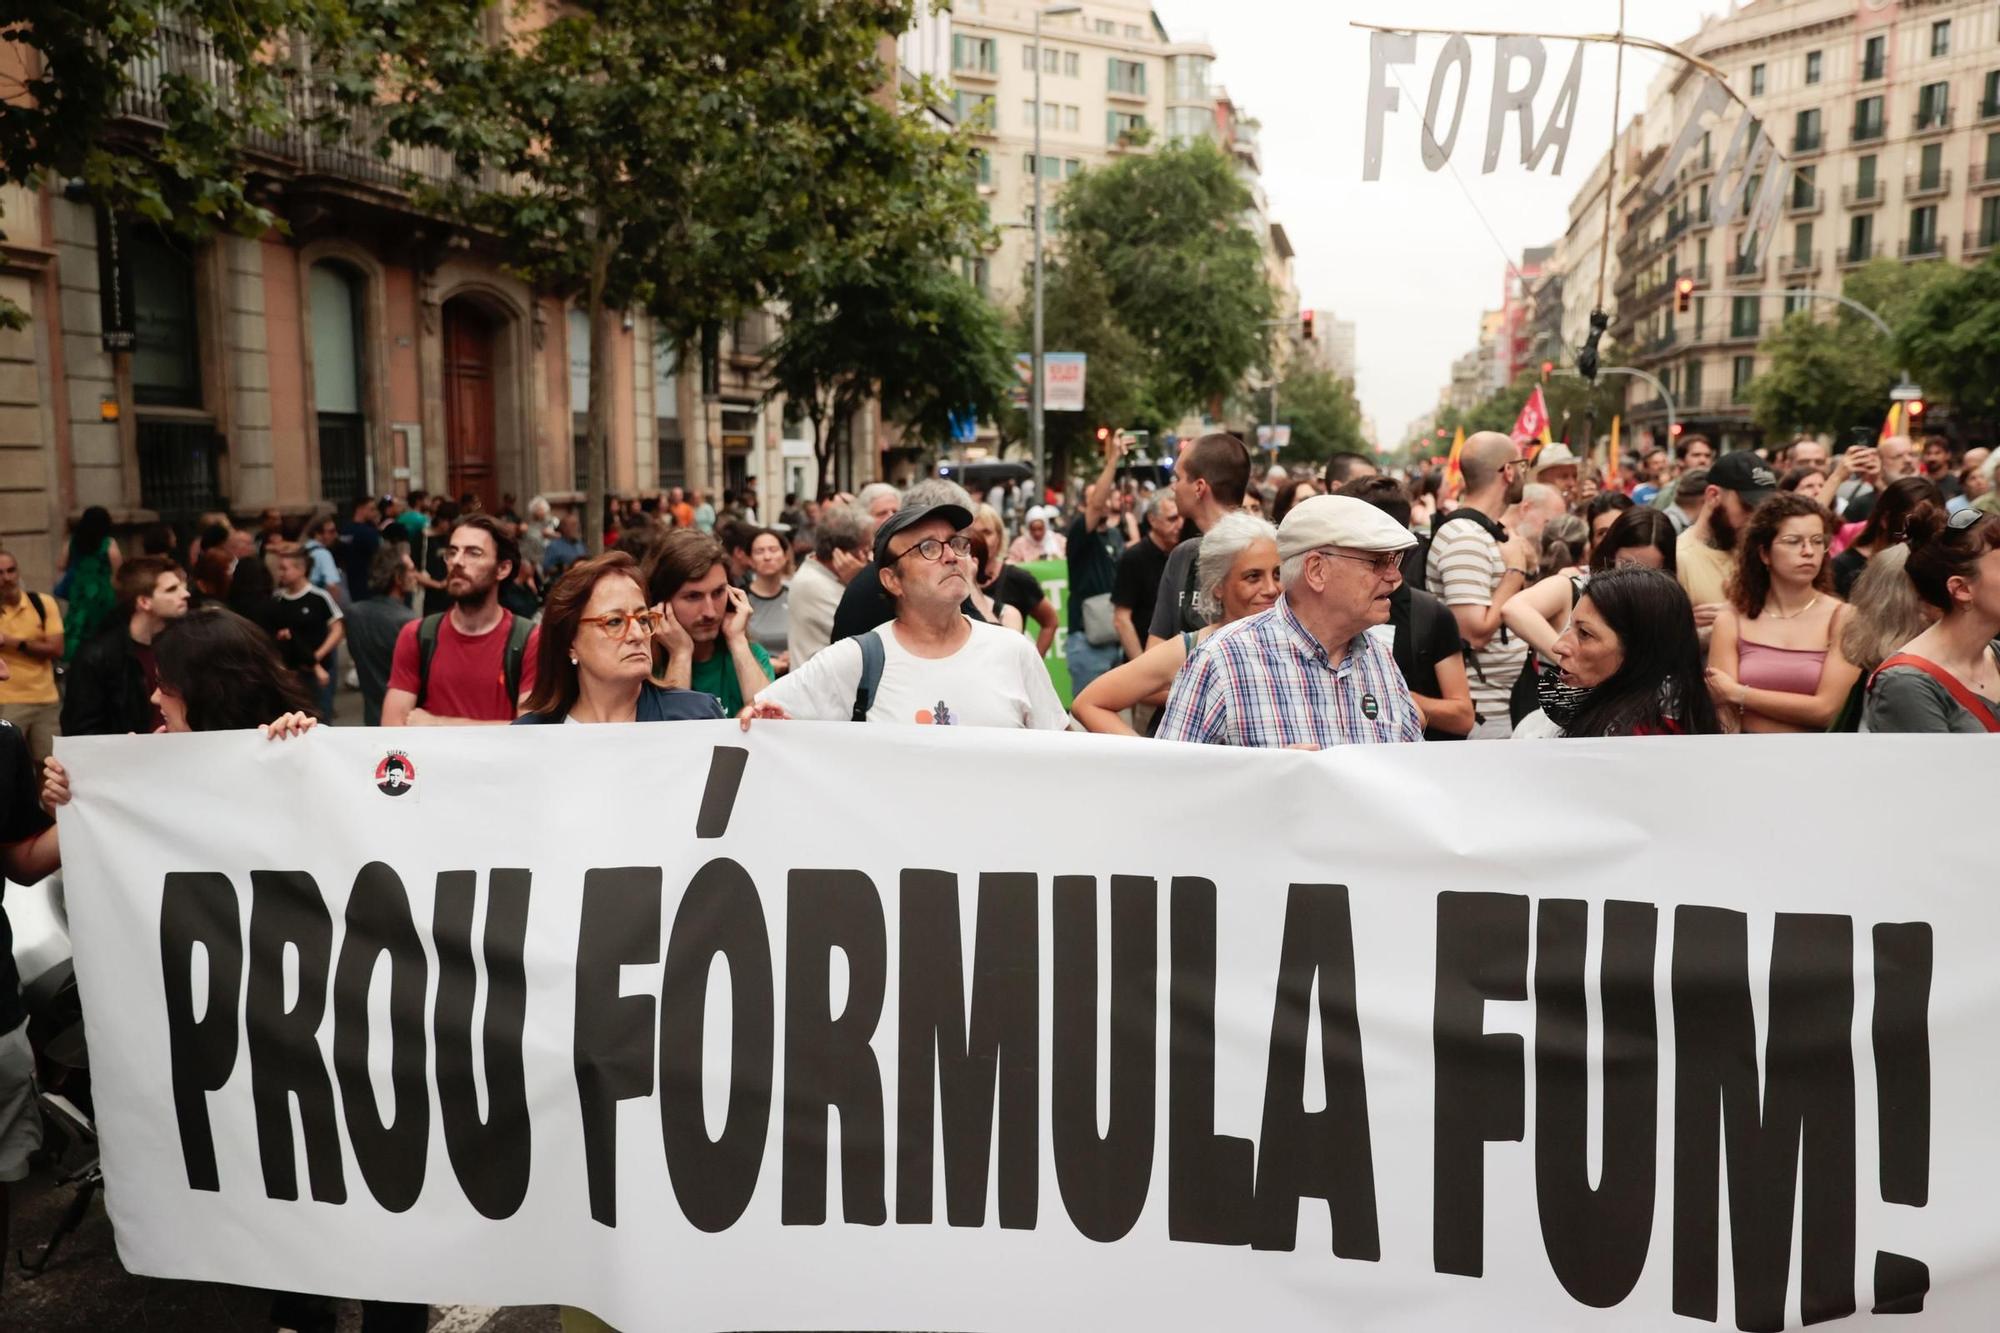 Protesta vecinal &quot;Fora Formula Fum&quot; contra el evento de F1 en el centro de Barcelona